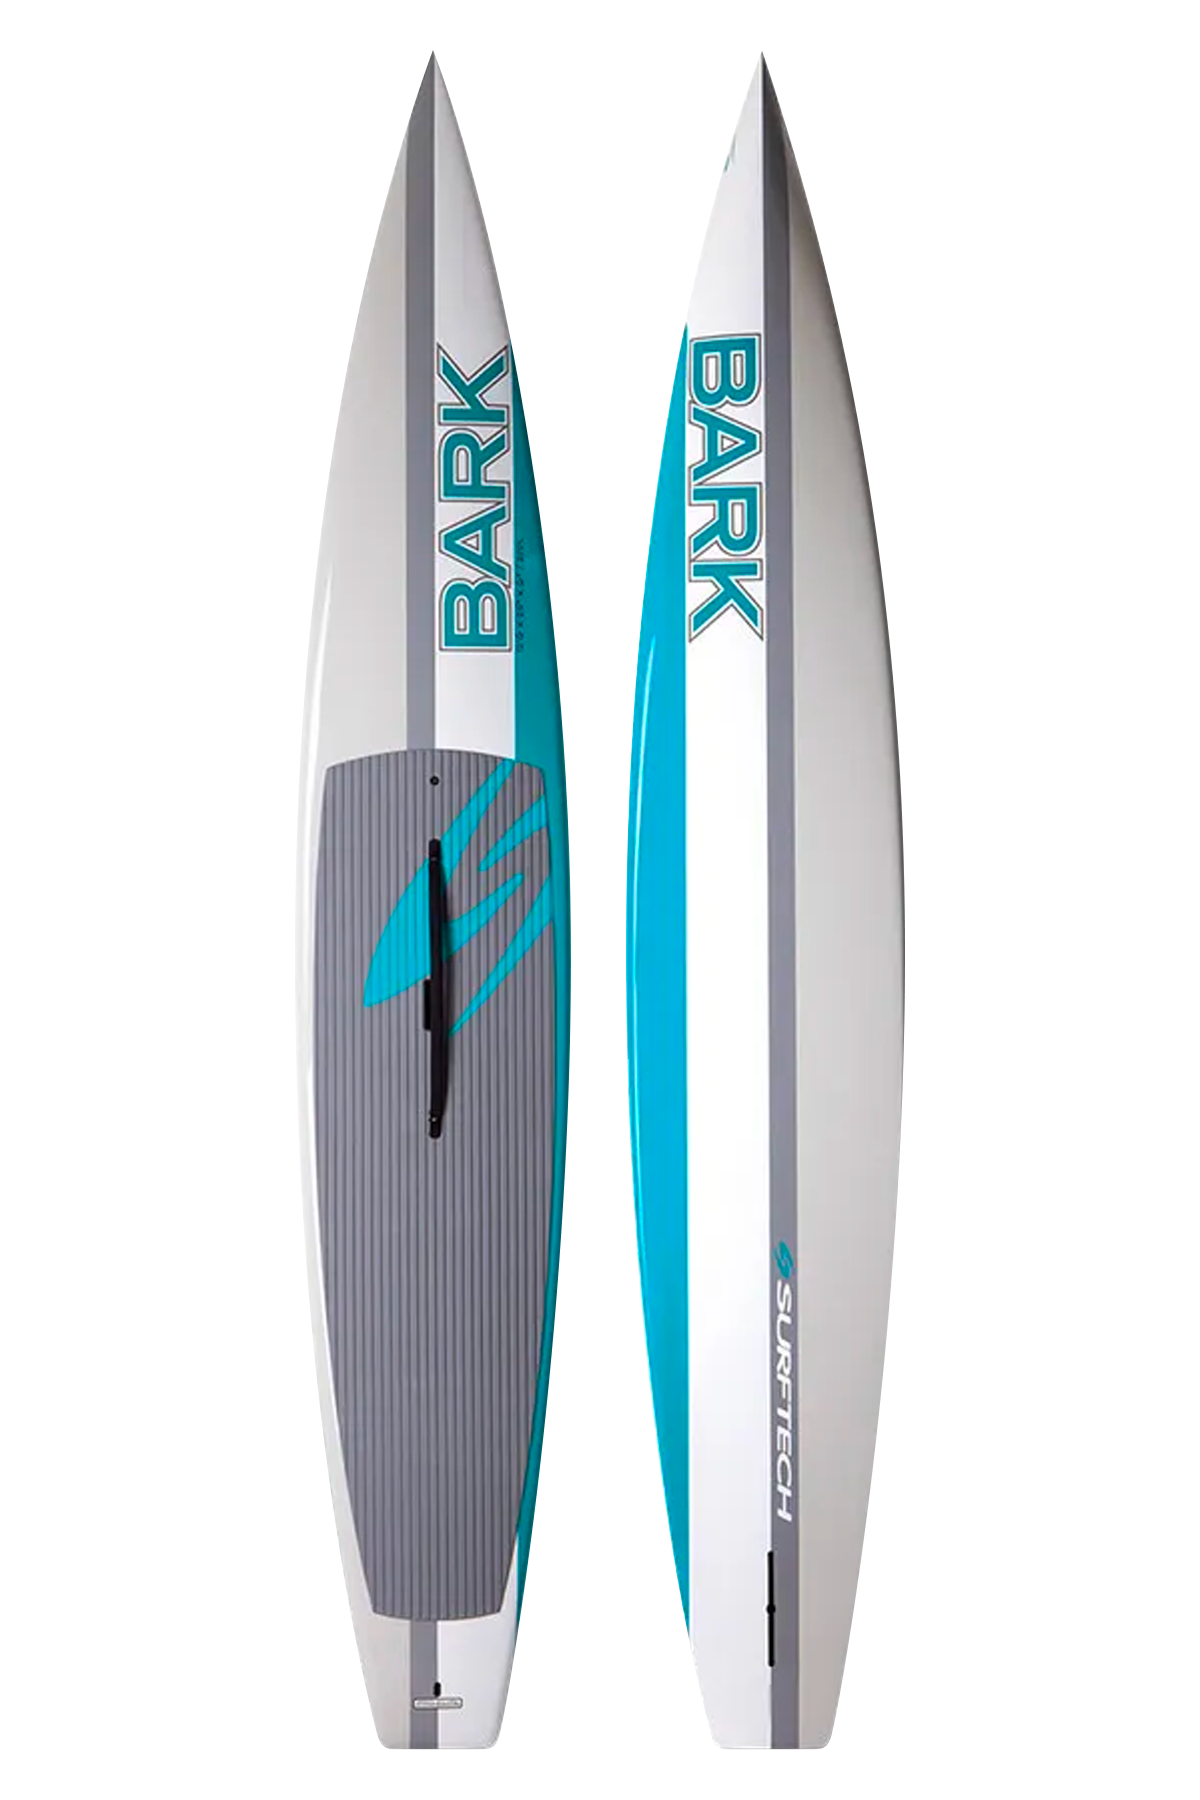 SURFTECH SUP BARK Elite CONTENDER 12'6" X 25"